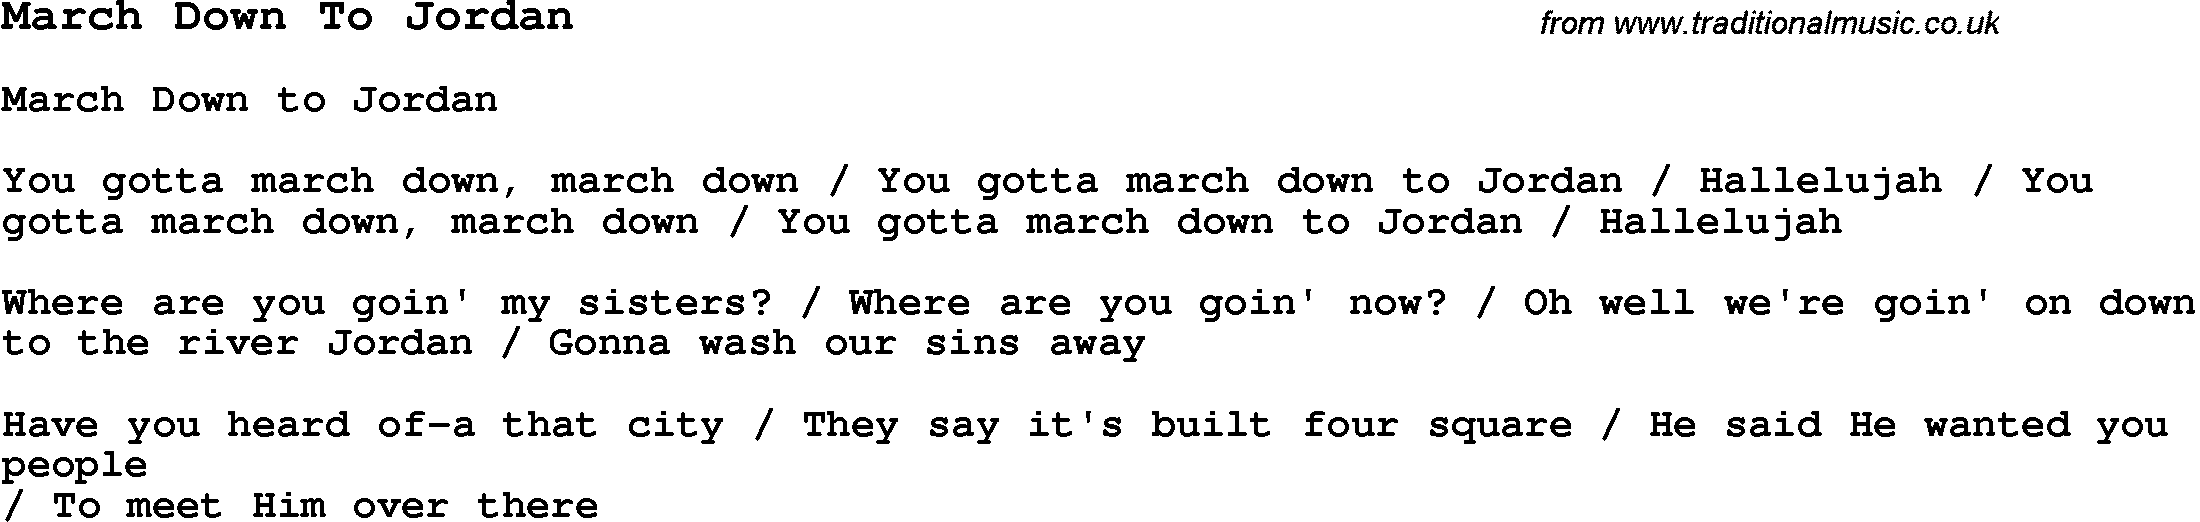 Negro Spiritual Song Lyrics for March Down To Jordan